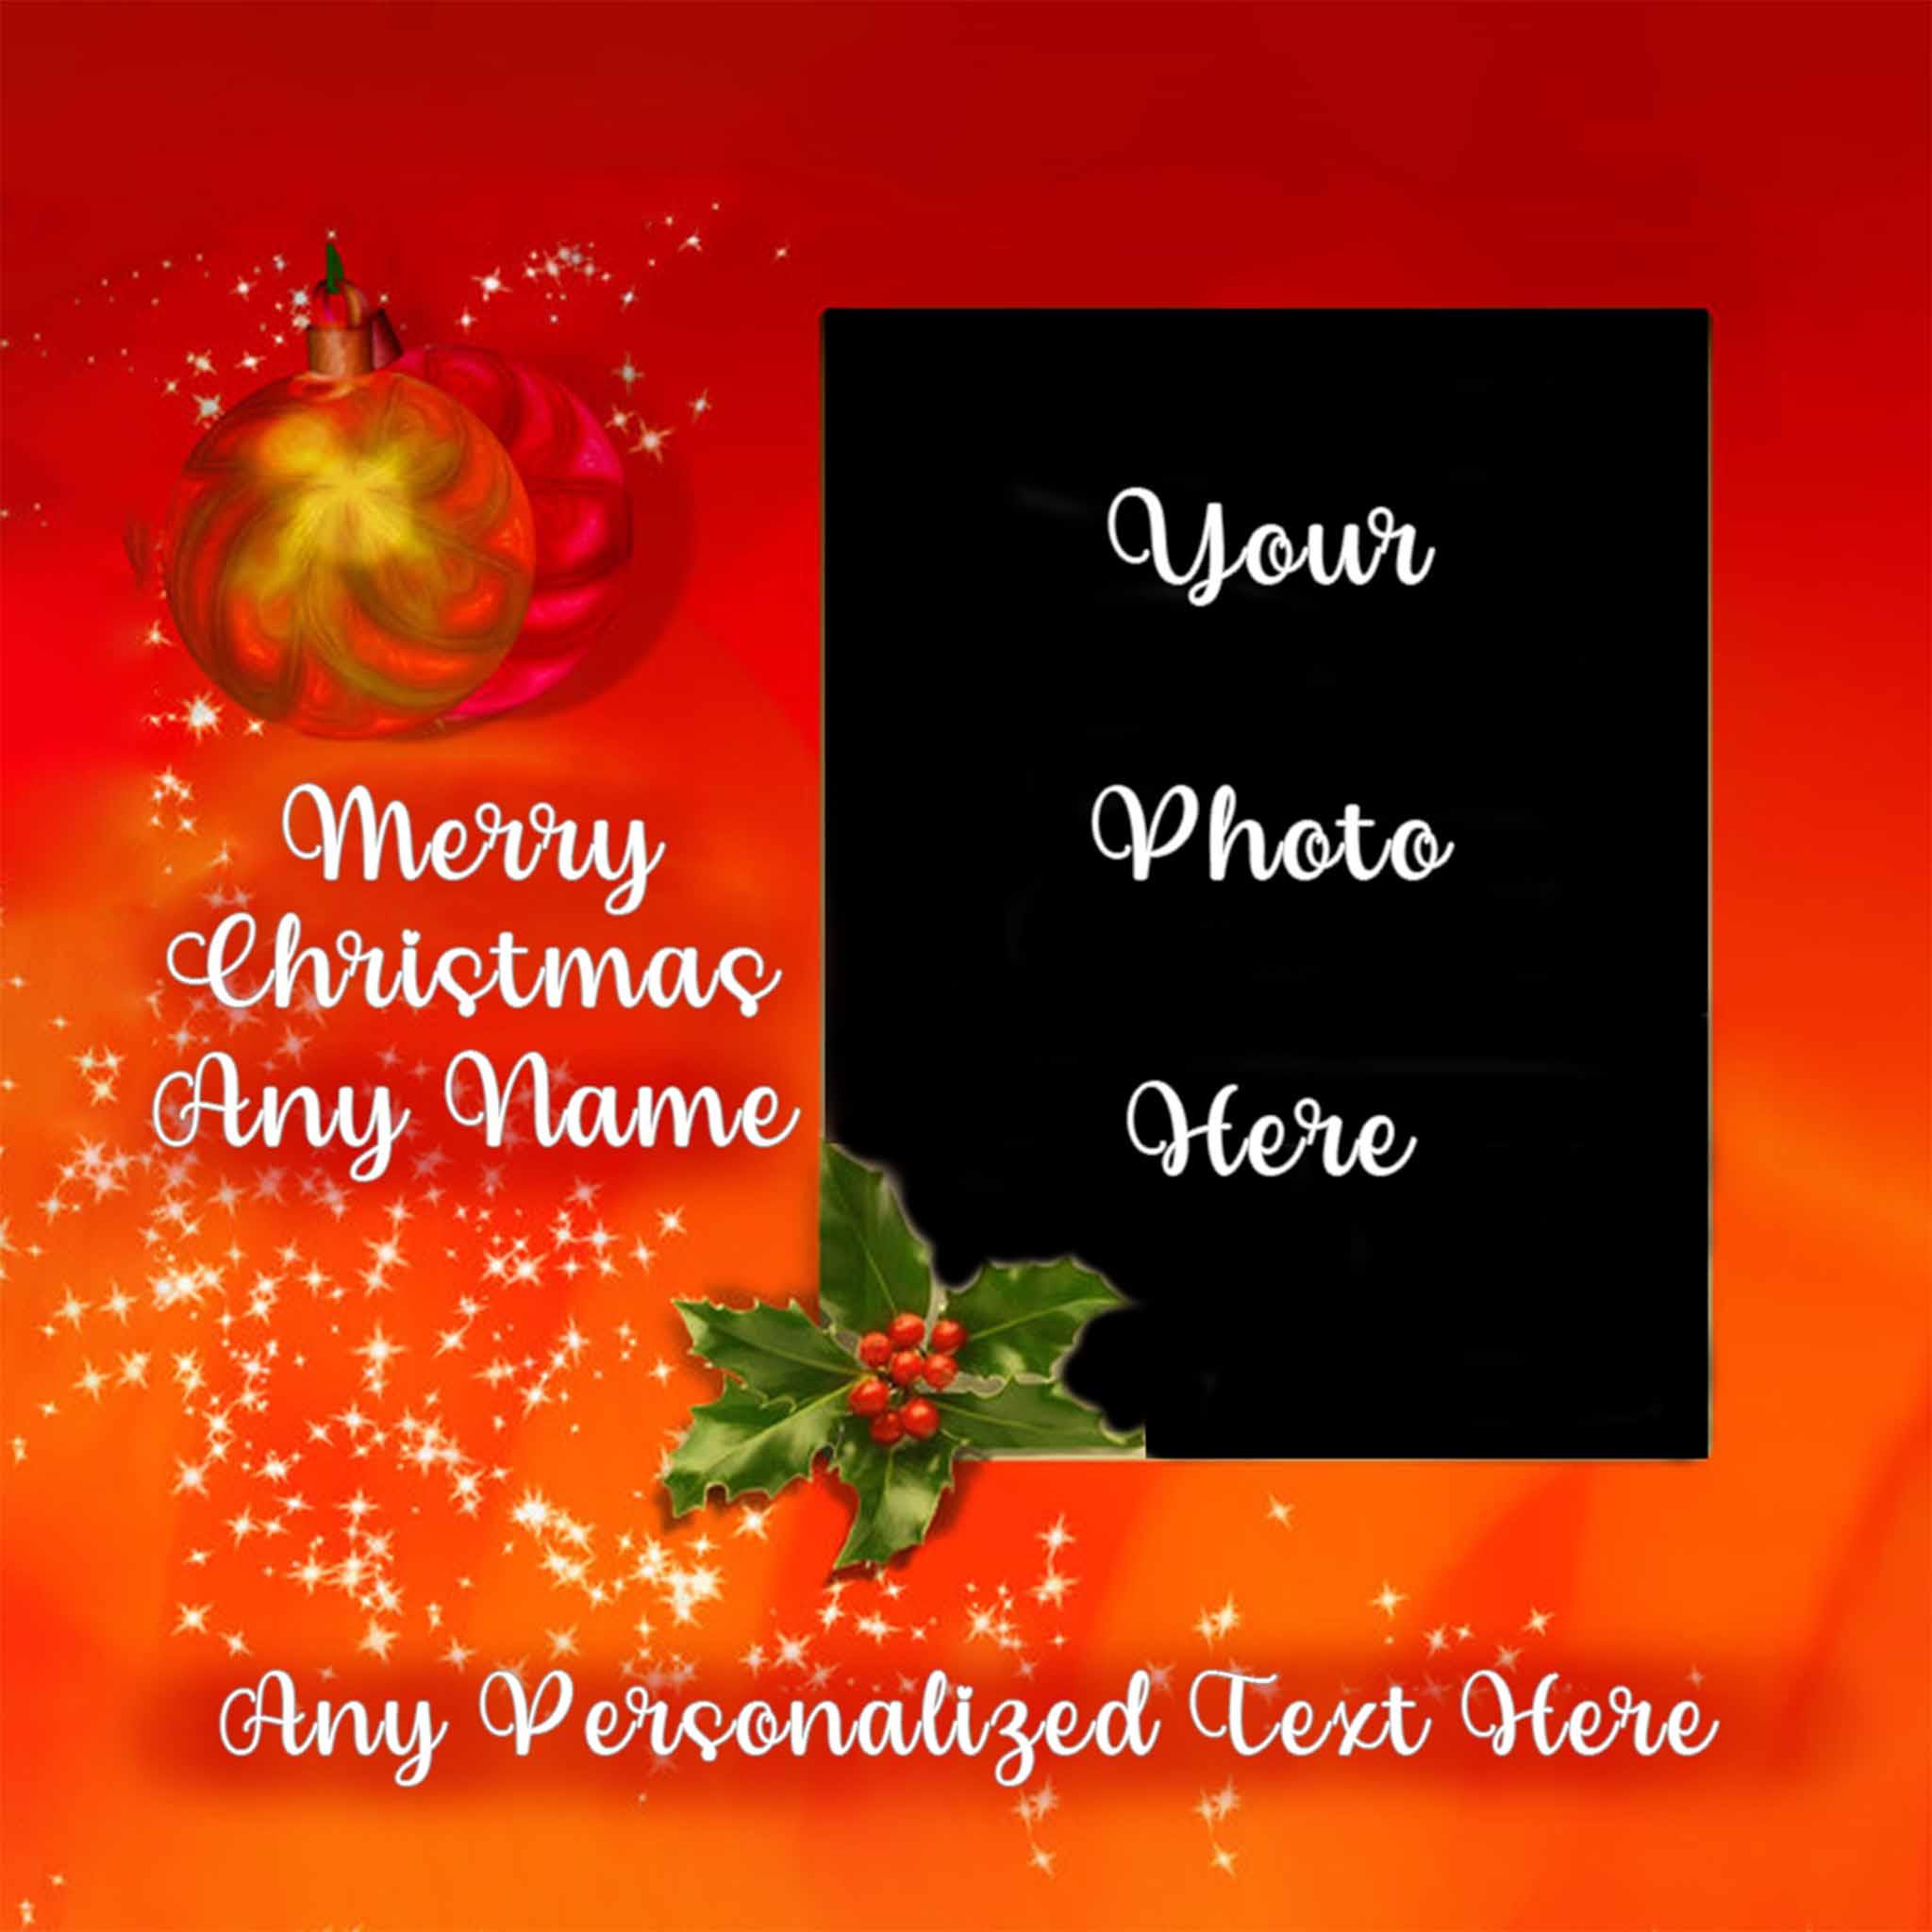 Interlocking Hearts Necklace Christmas Photo v1 Personalized Insert CardCustomly Gifts